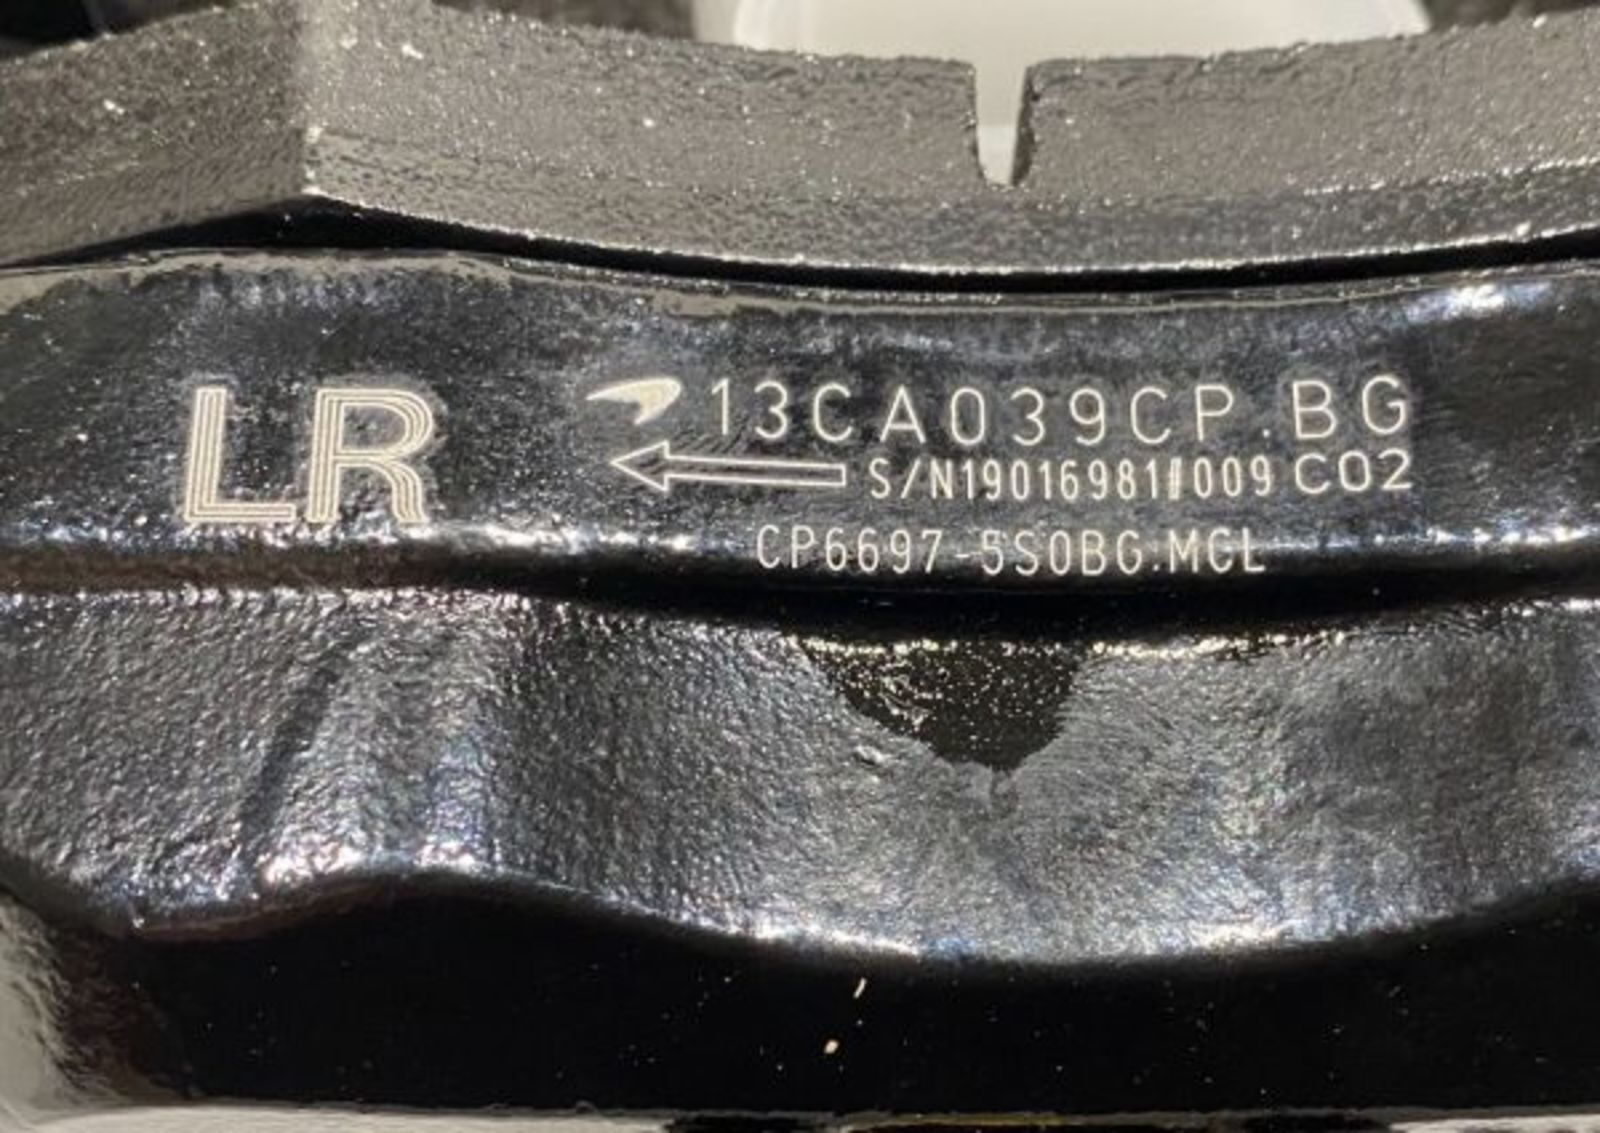 MCLAREN bremssattel brake caliper RR LH nr 13CA039CP BG 353877354026 5